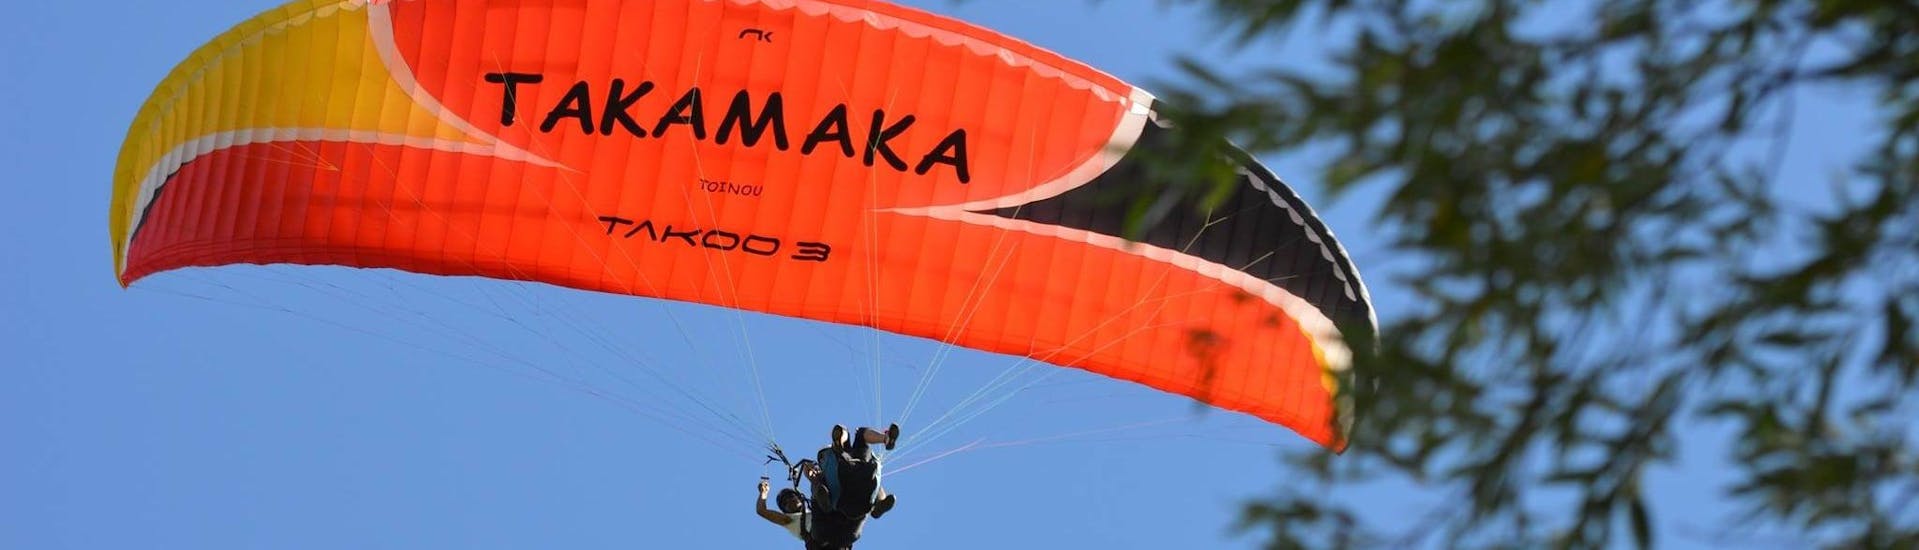 tandem-paragliding-discovery-aix-les-bains-takamaka-aix-les-bains-hero